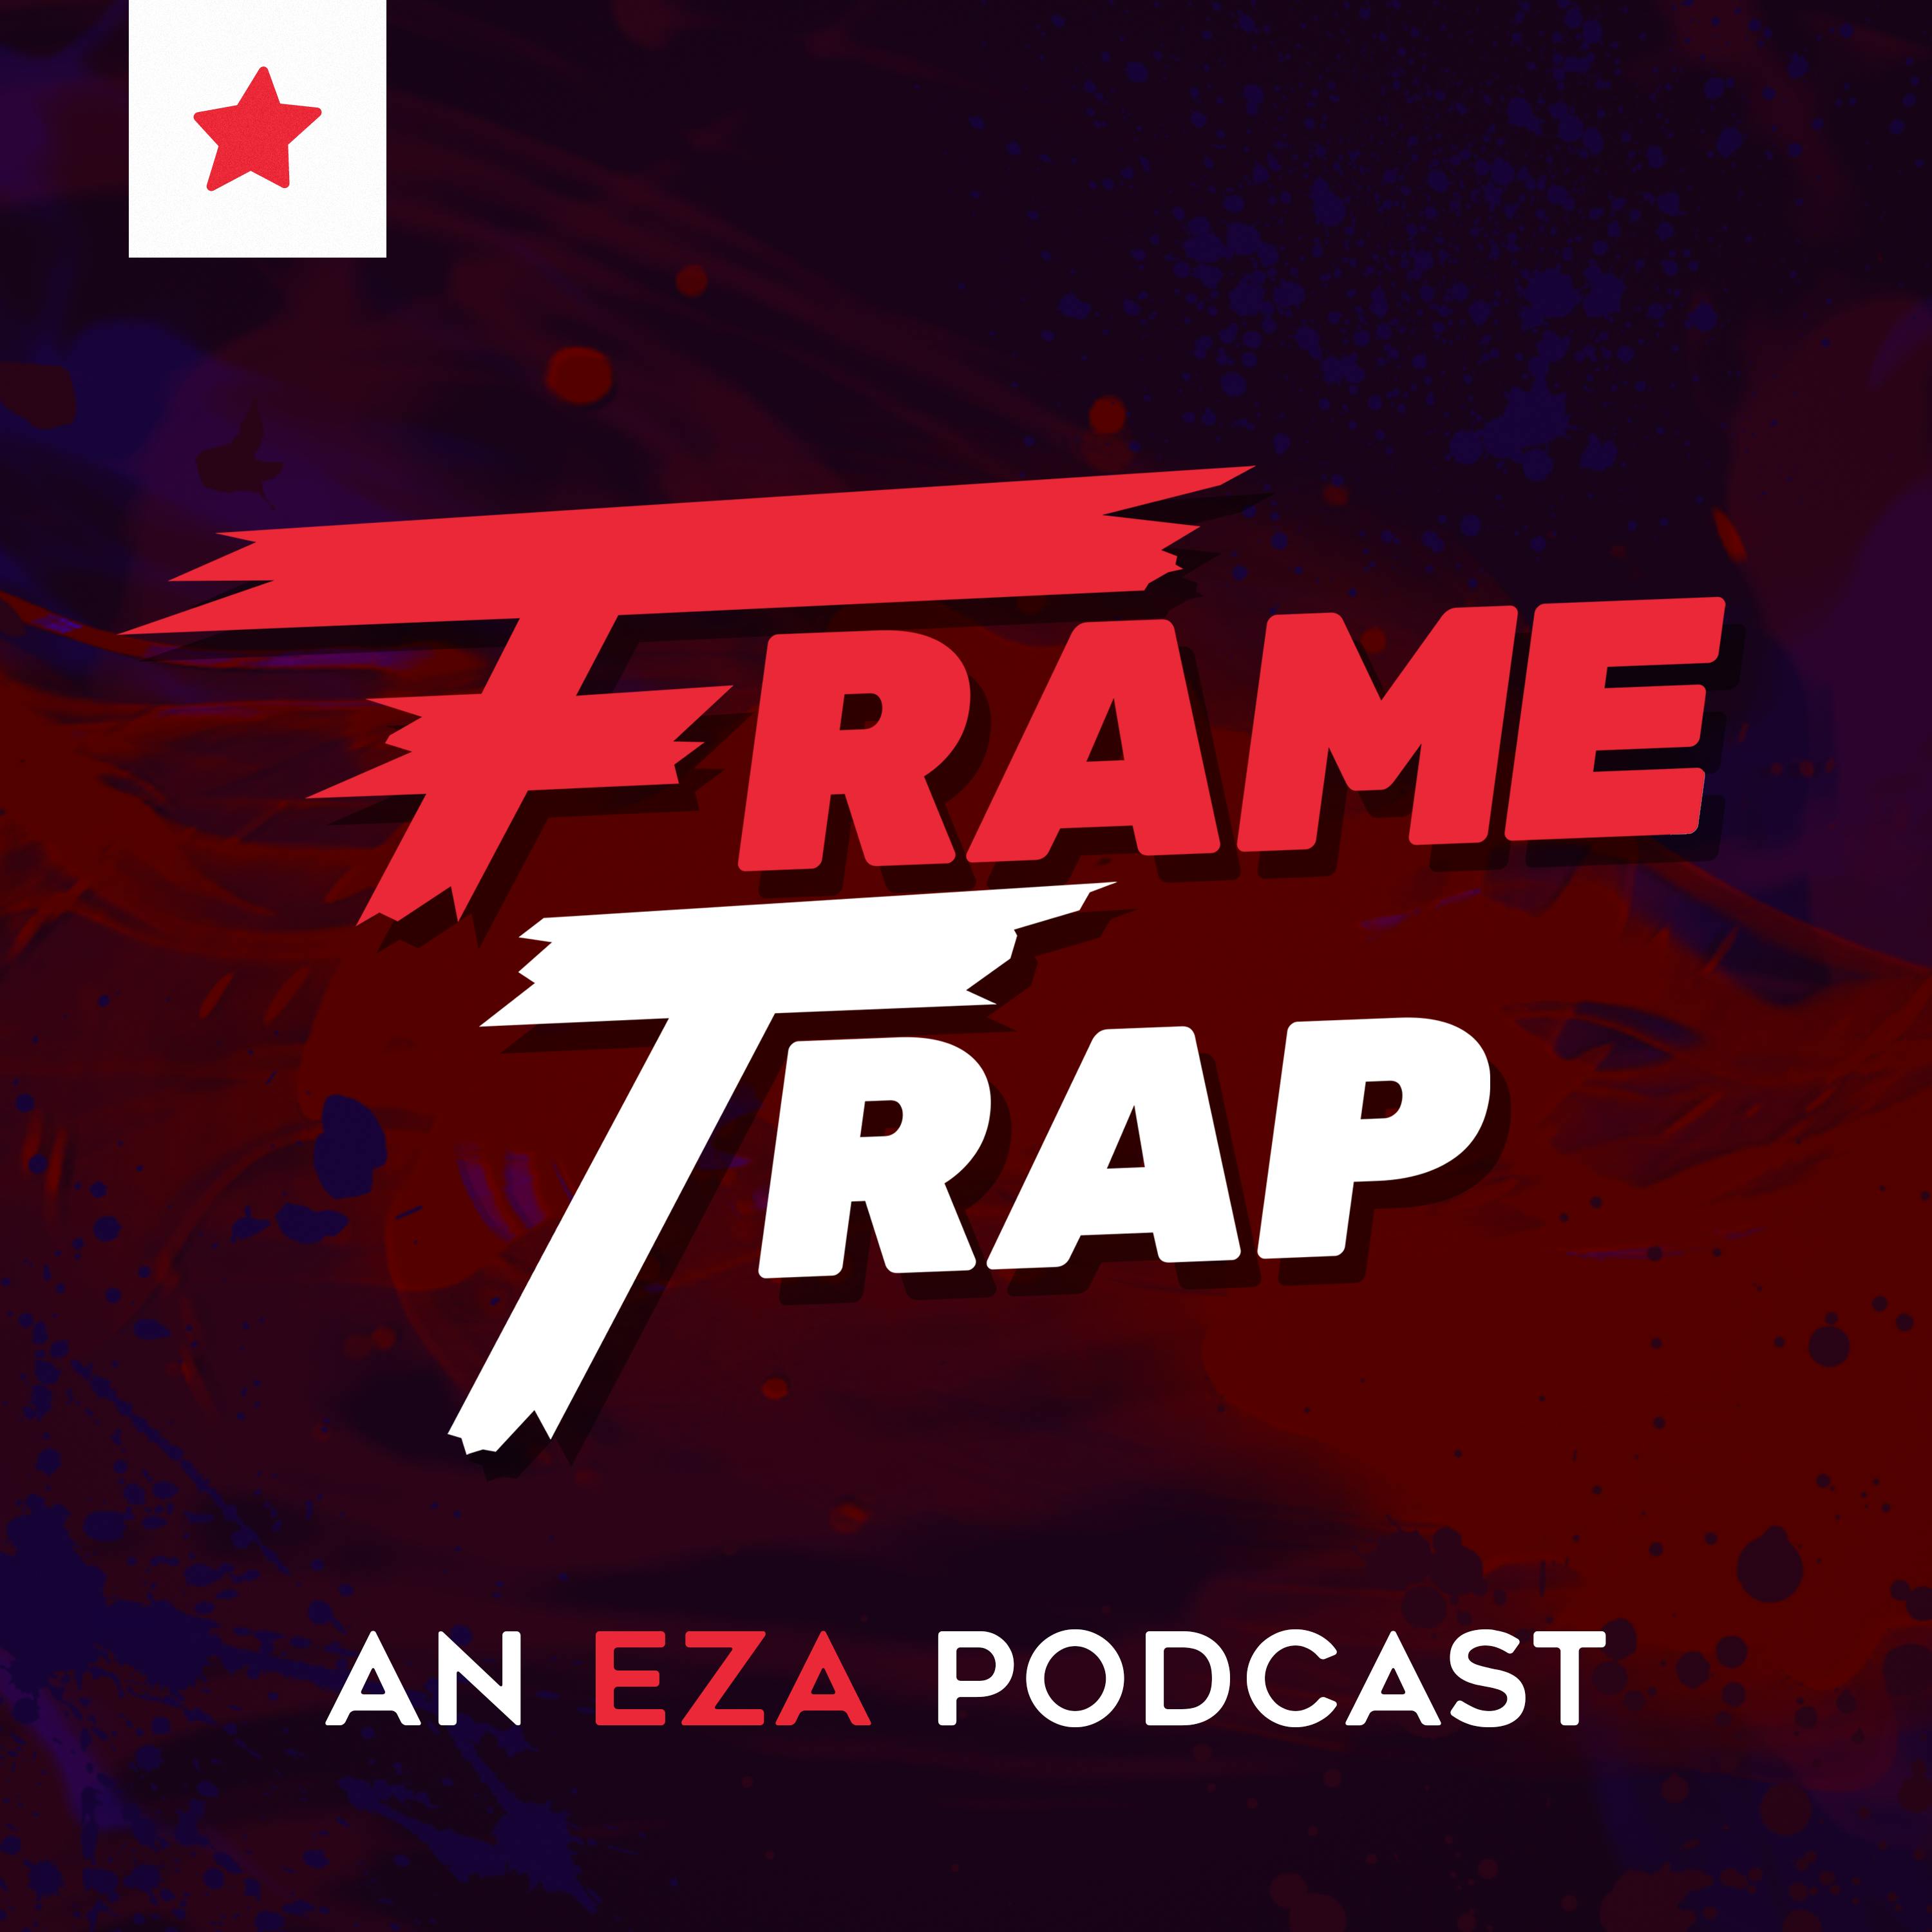 Frame Trap - Episode 178 